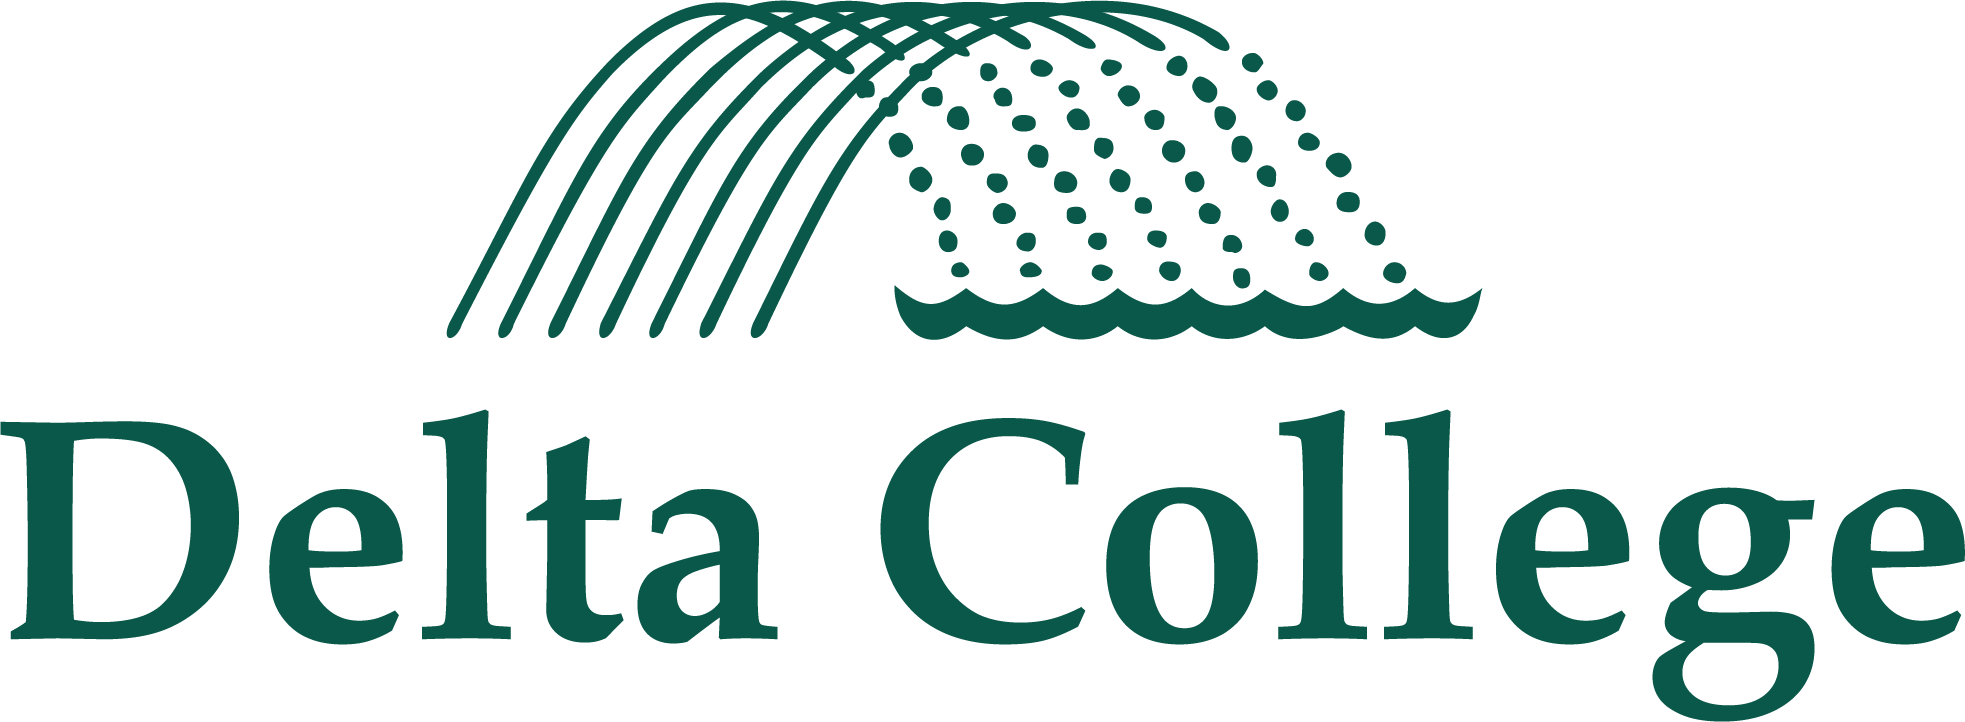 Delta College logo - green